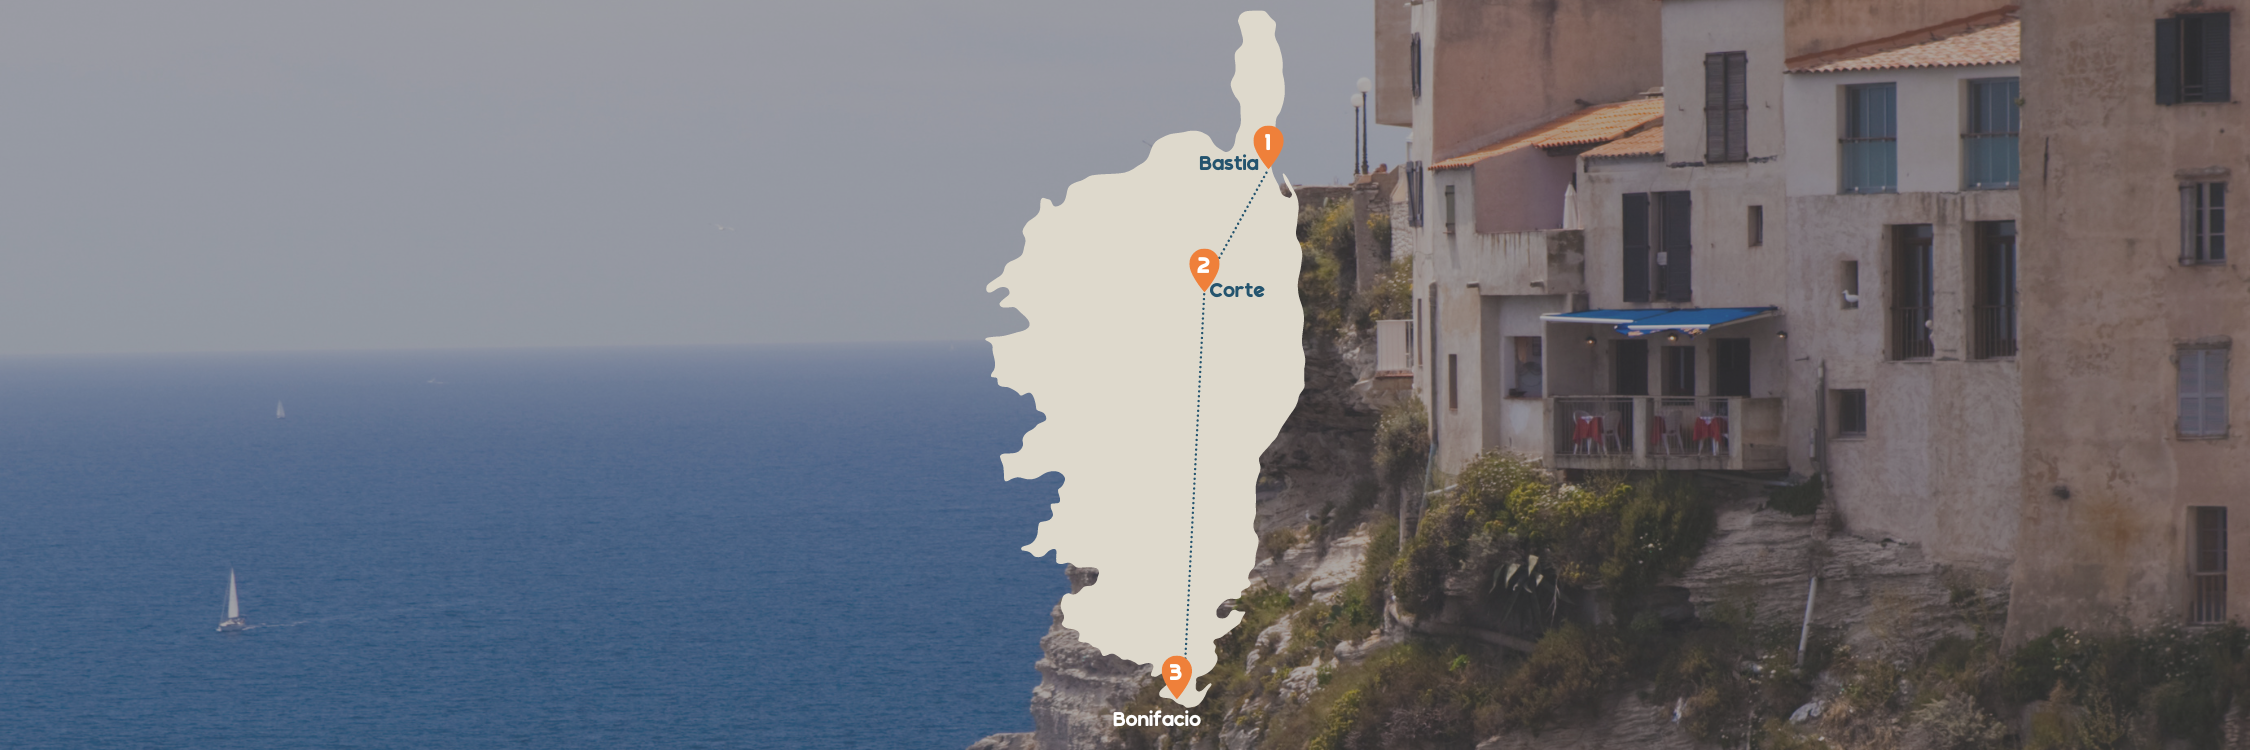 Landenkaartje desktop langs Bastia, Corte en Bonifacio